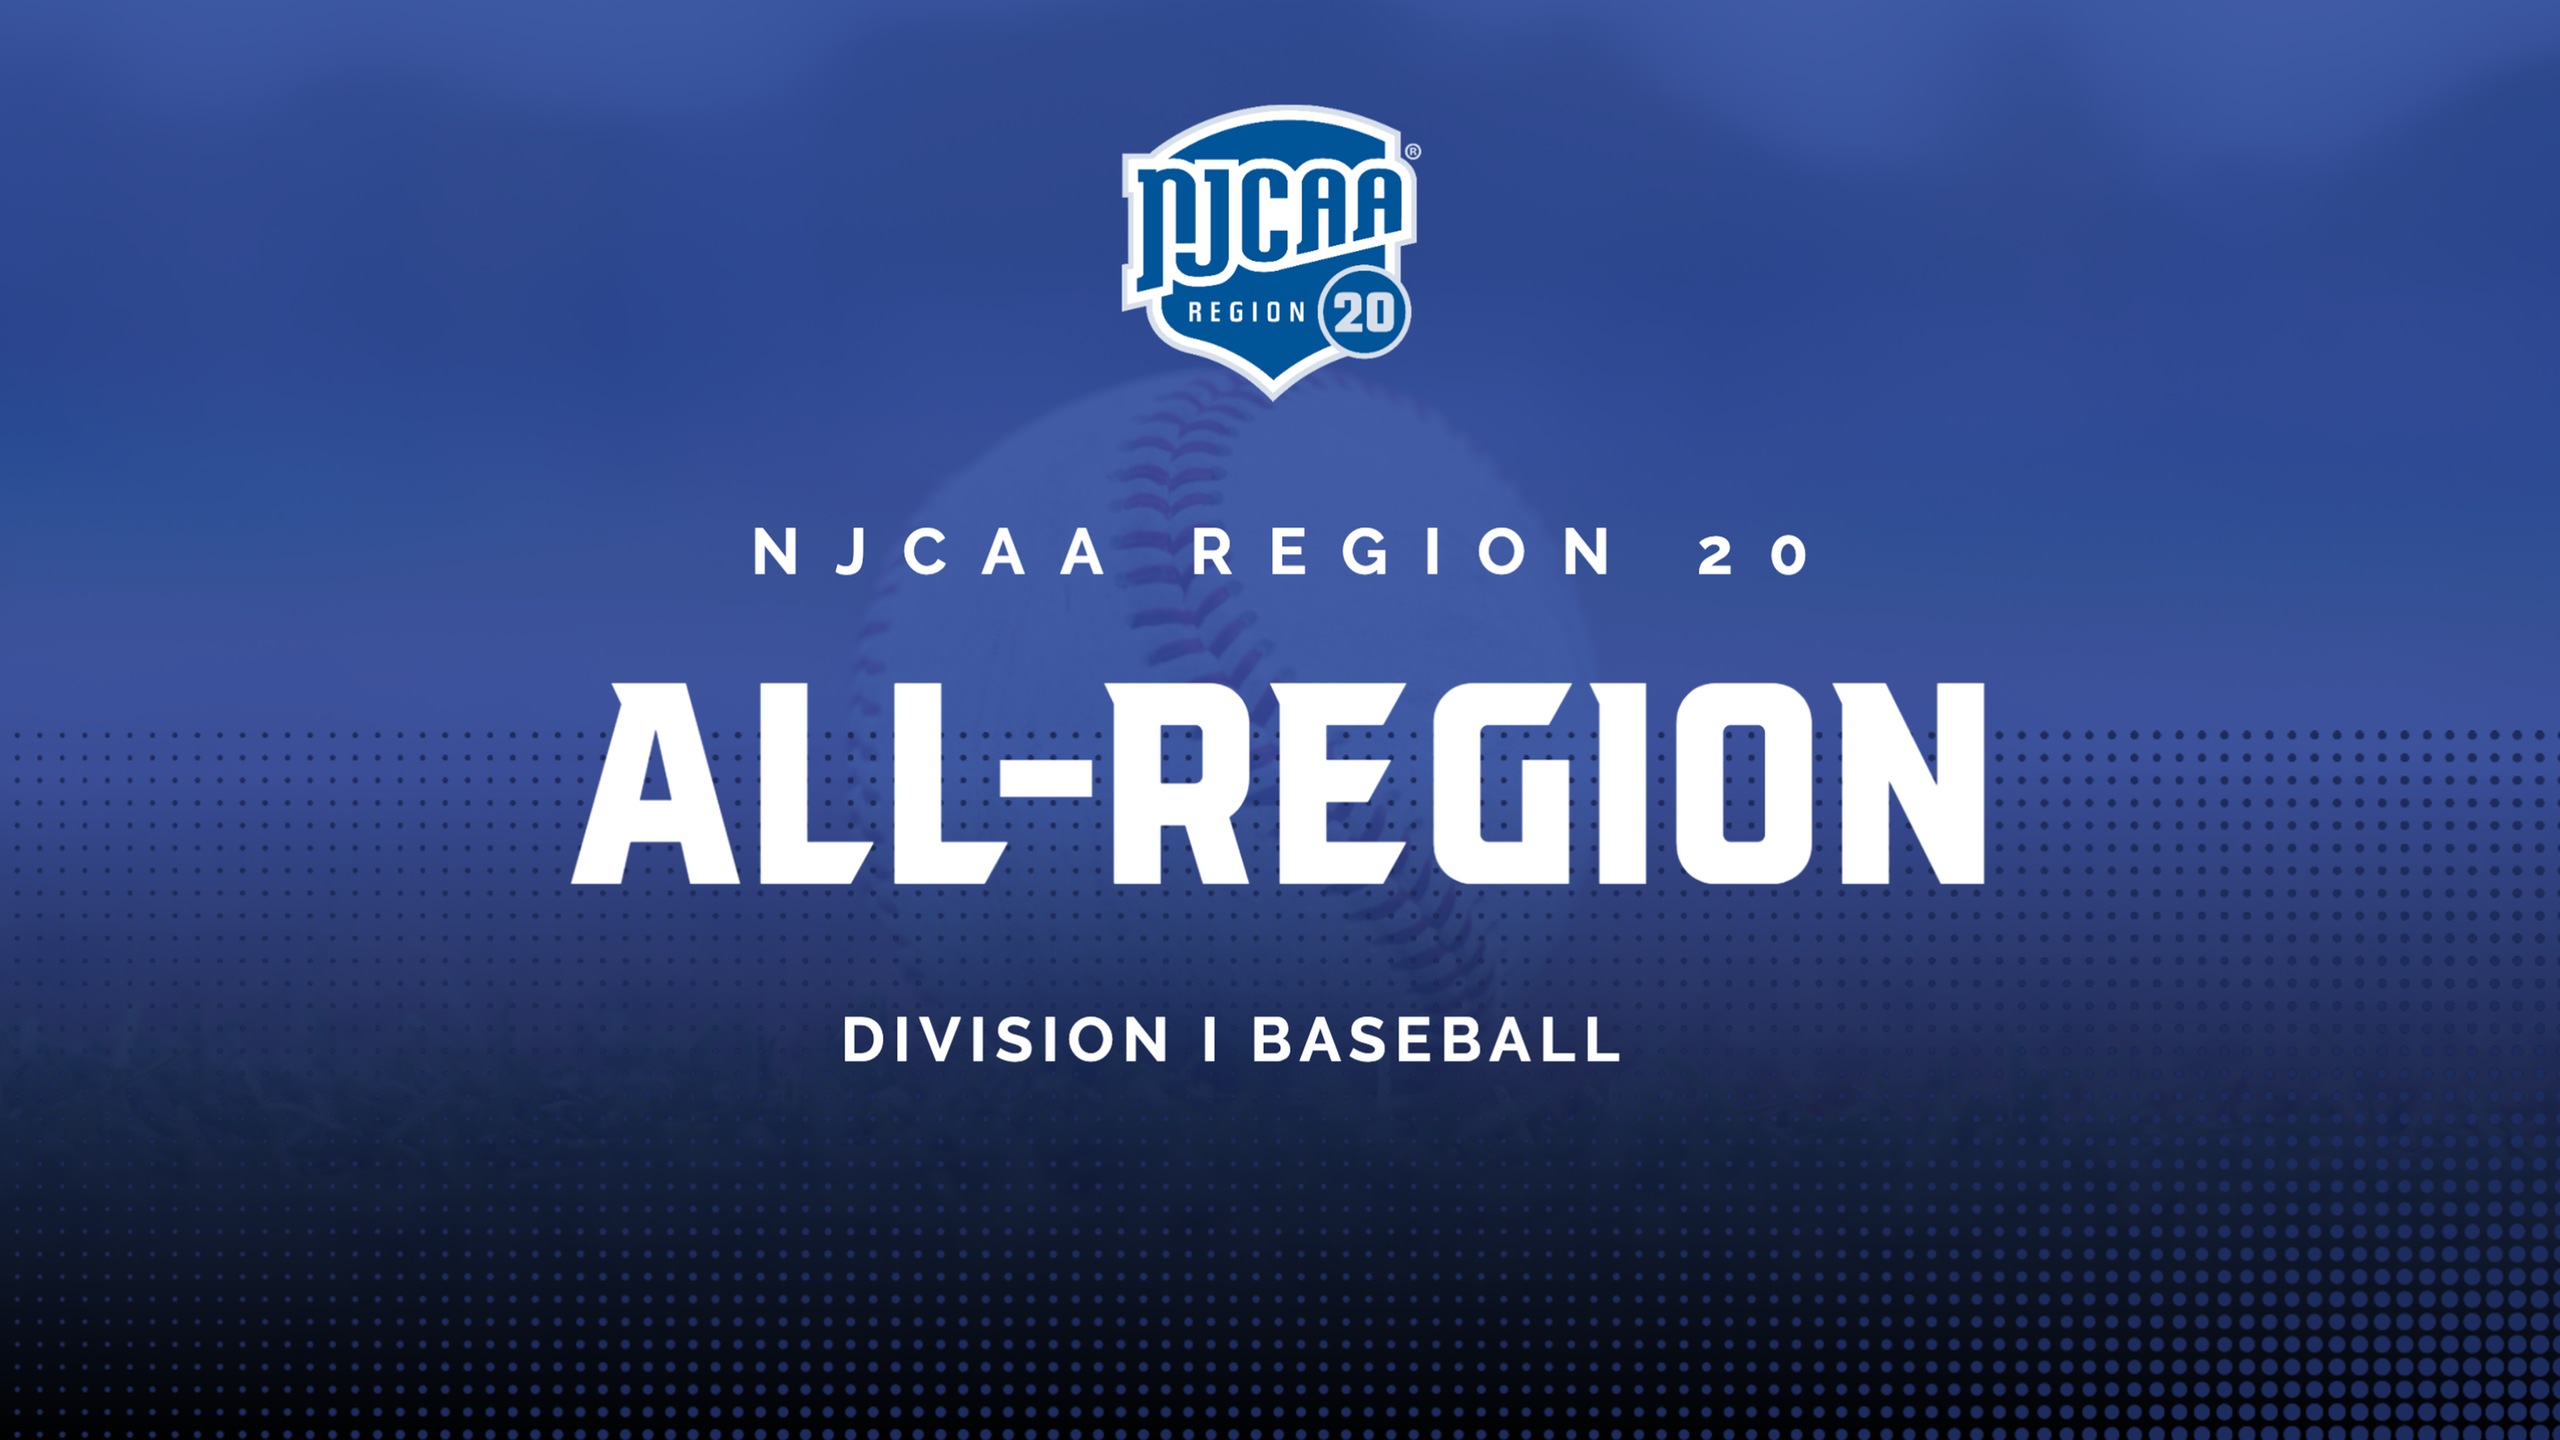 All-Region 20 Division I Baseball Team Announced